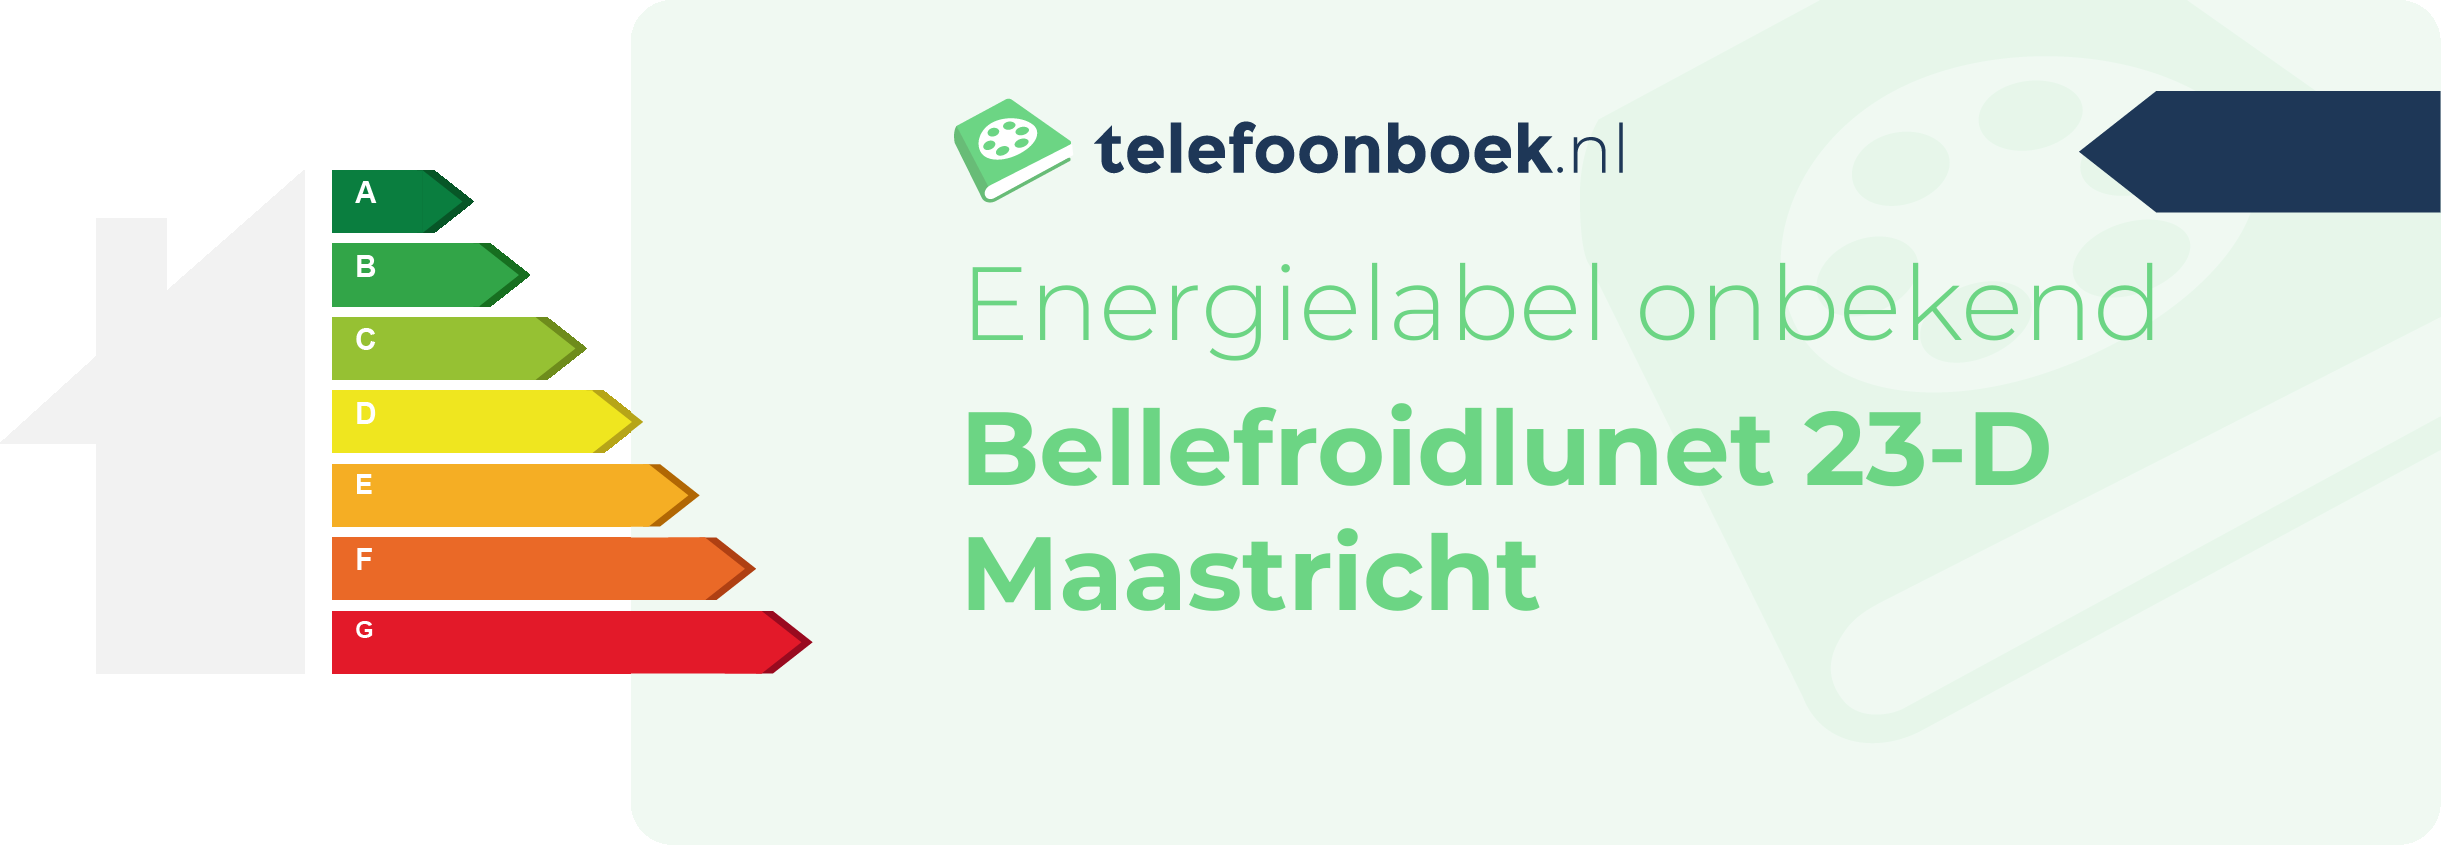 Energielabel Bellefroidlunet 23-D Maastricht